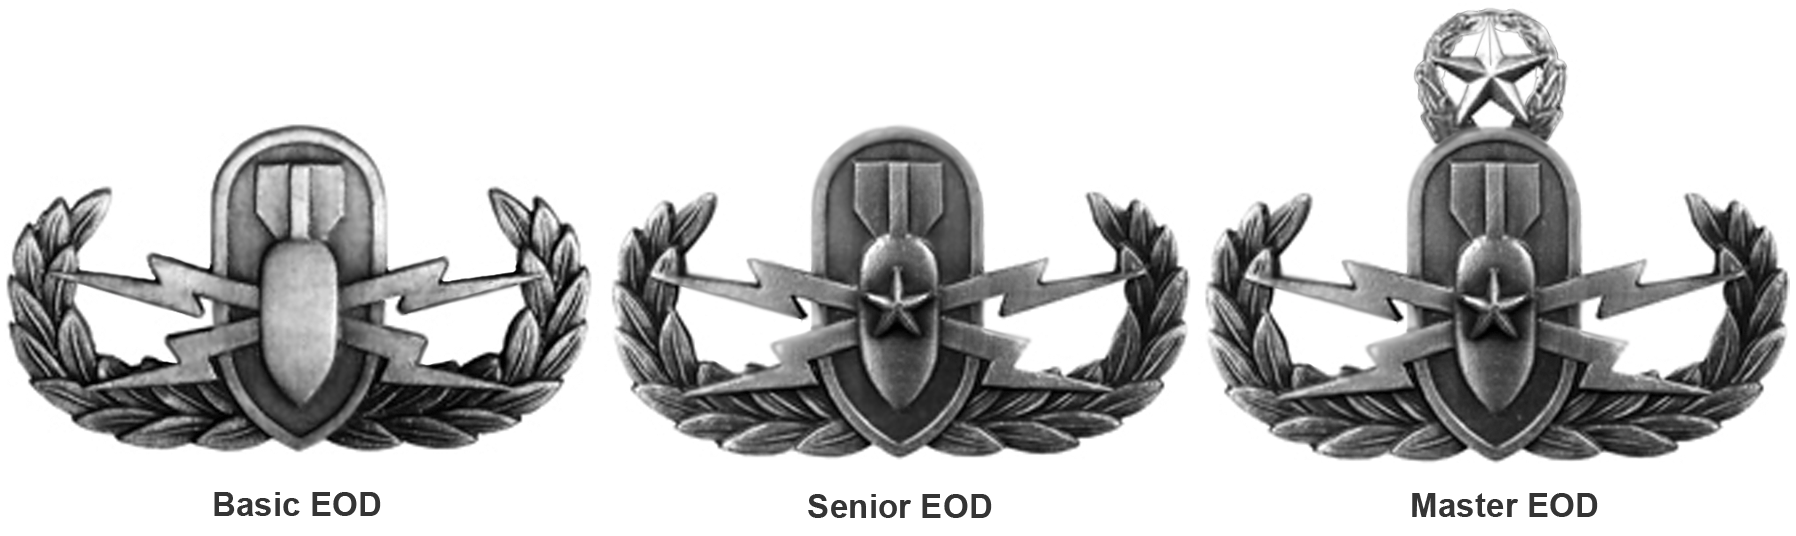 EOD Crab Logo - EOD Insignia.png